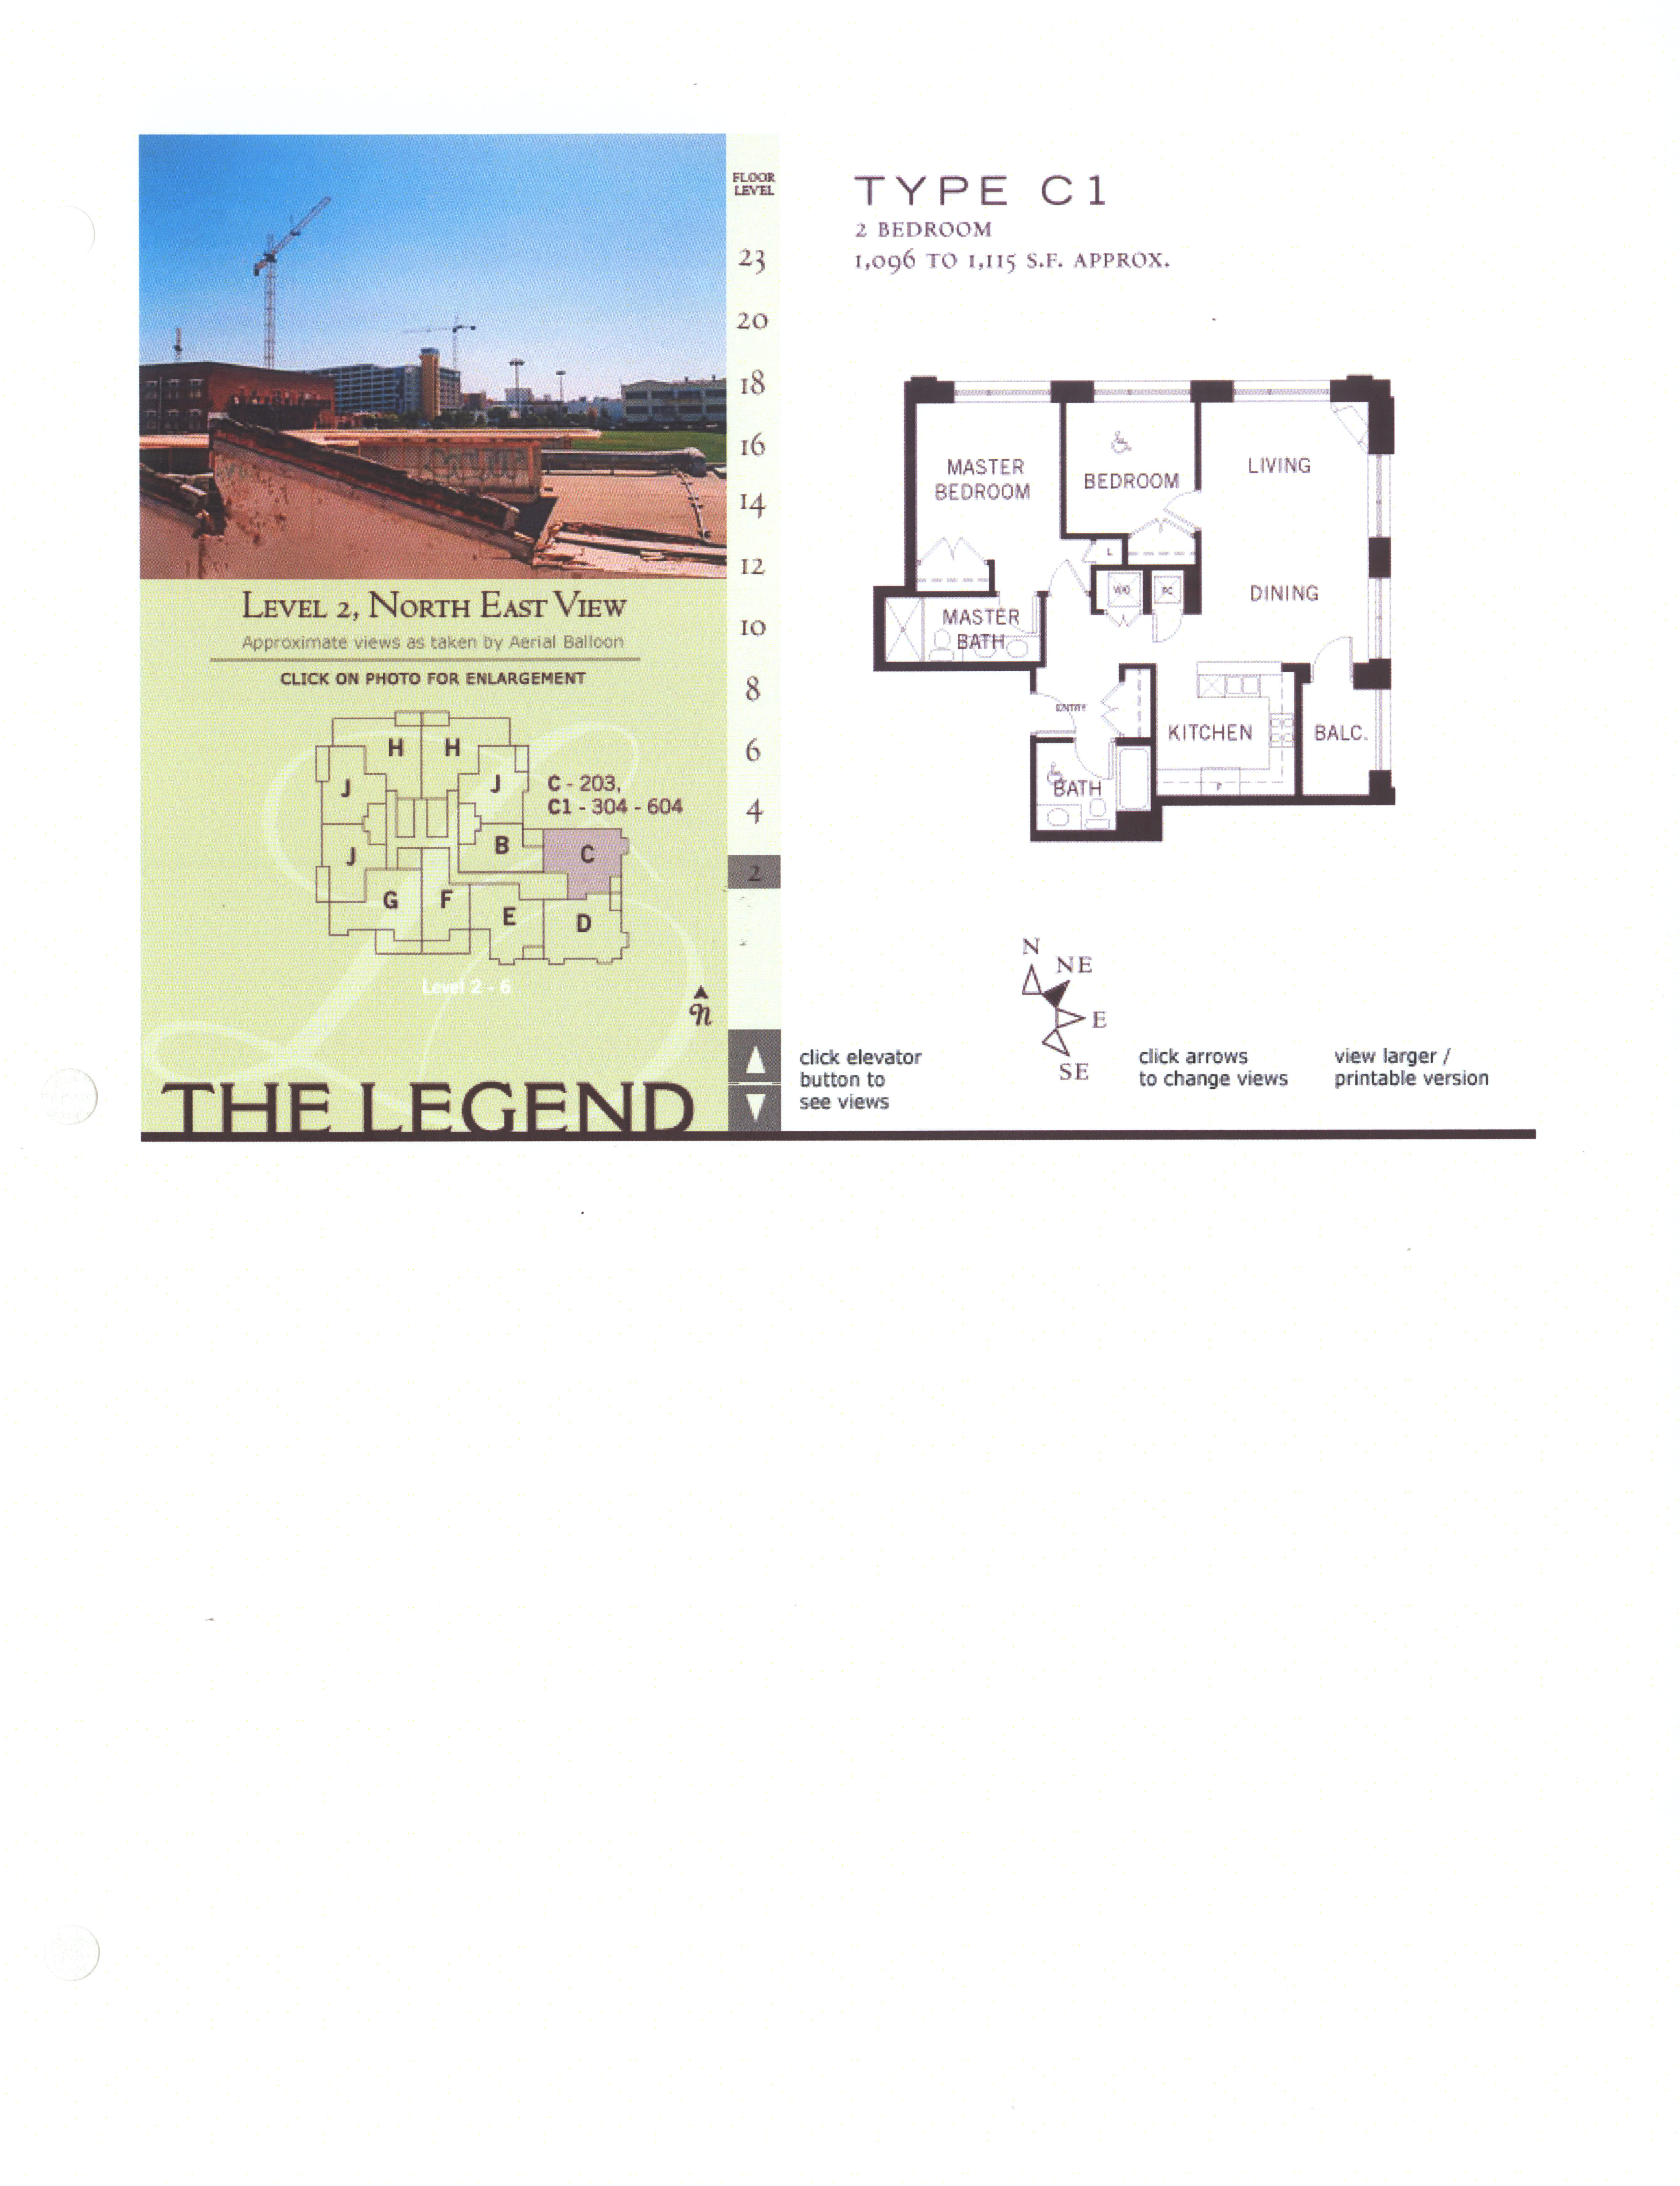 The Legend Floor Plan Level 2, North East View – Type C1